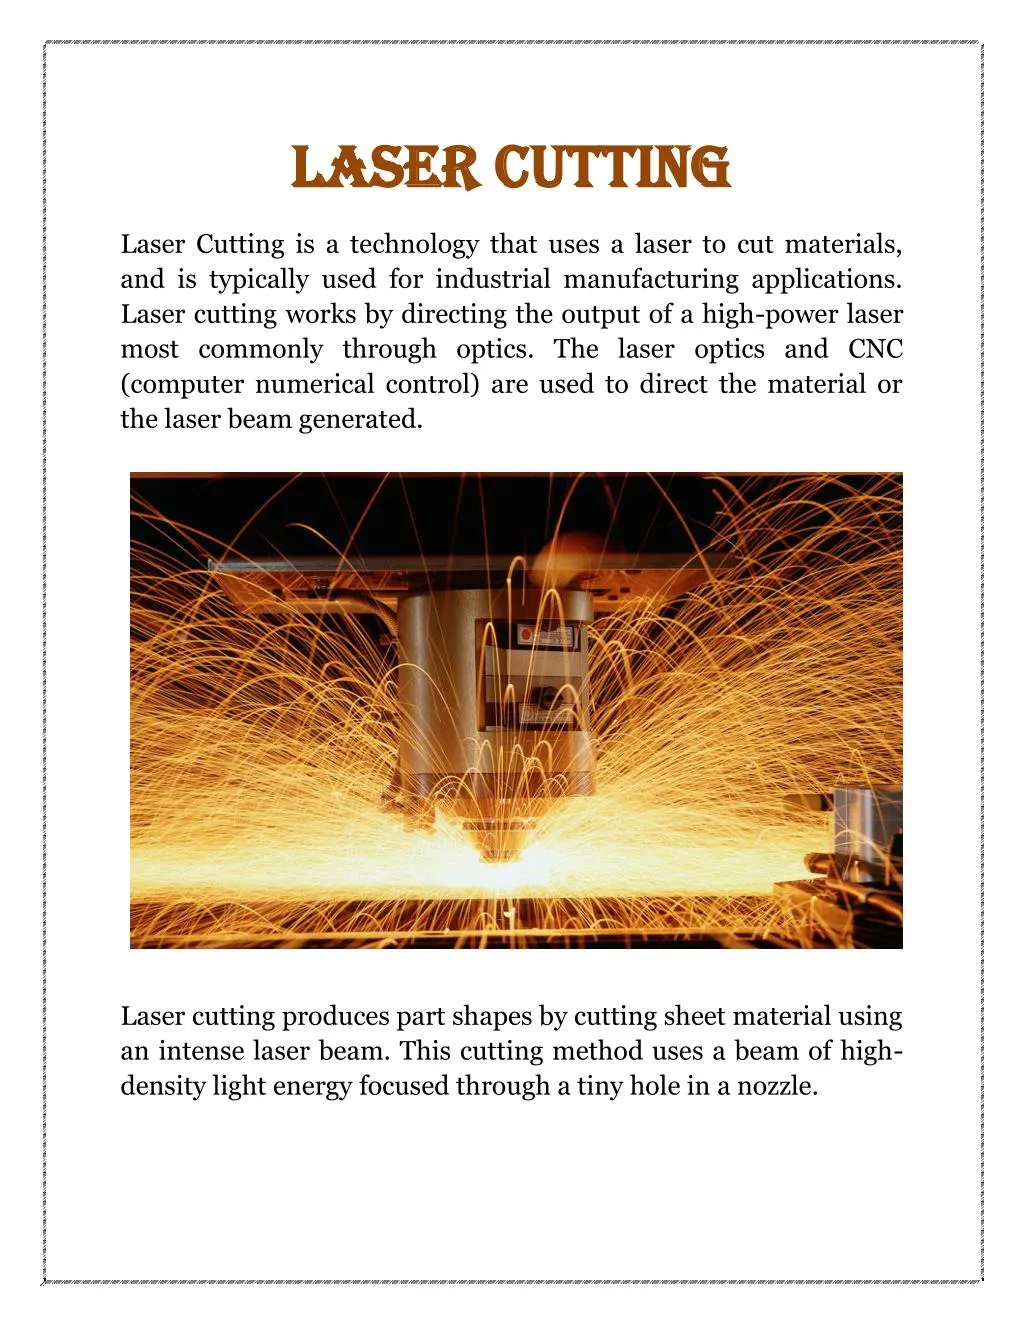 laser cutting laser cutting